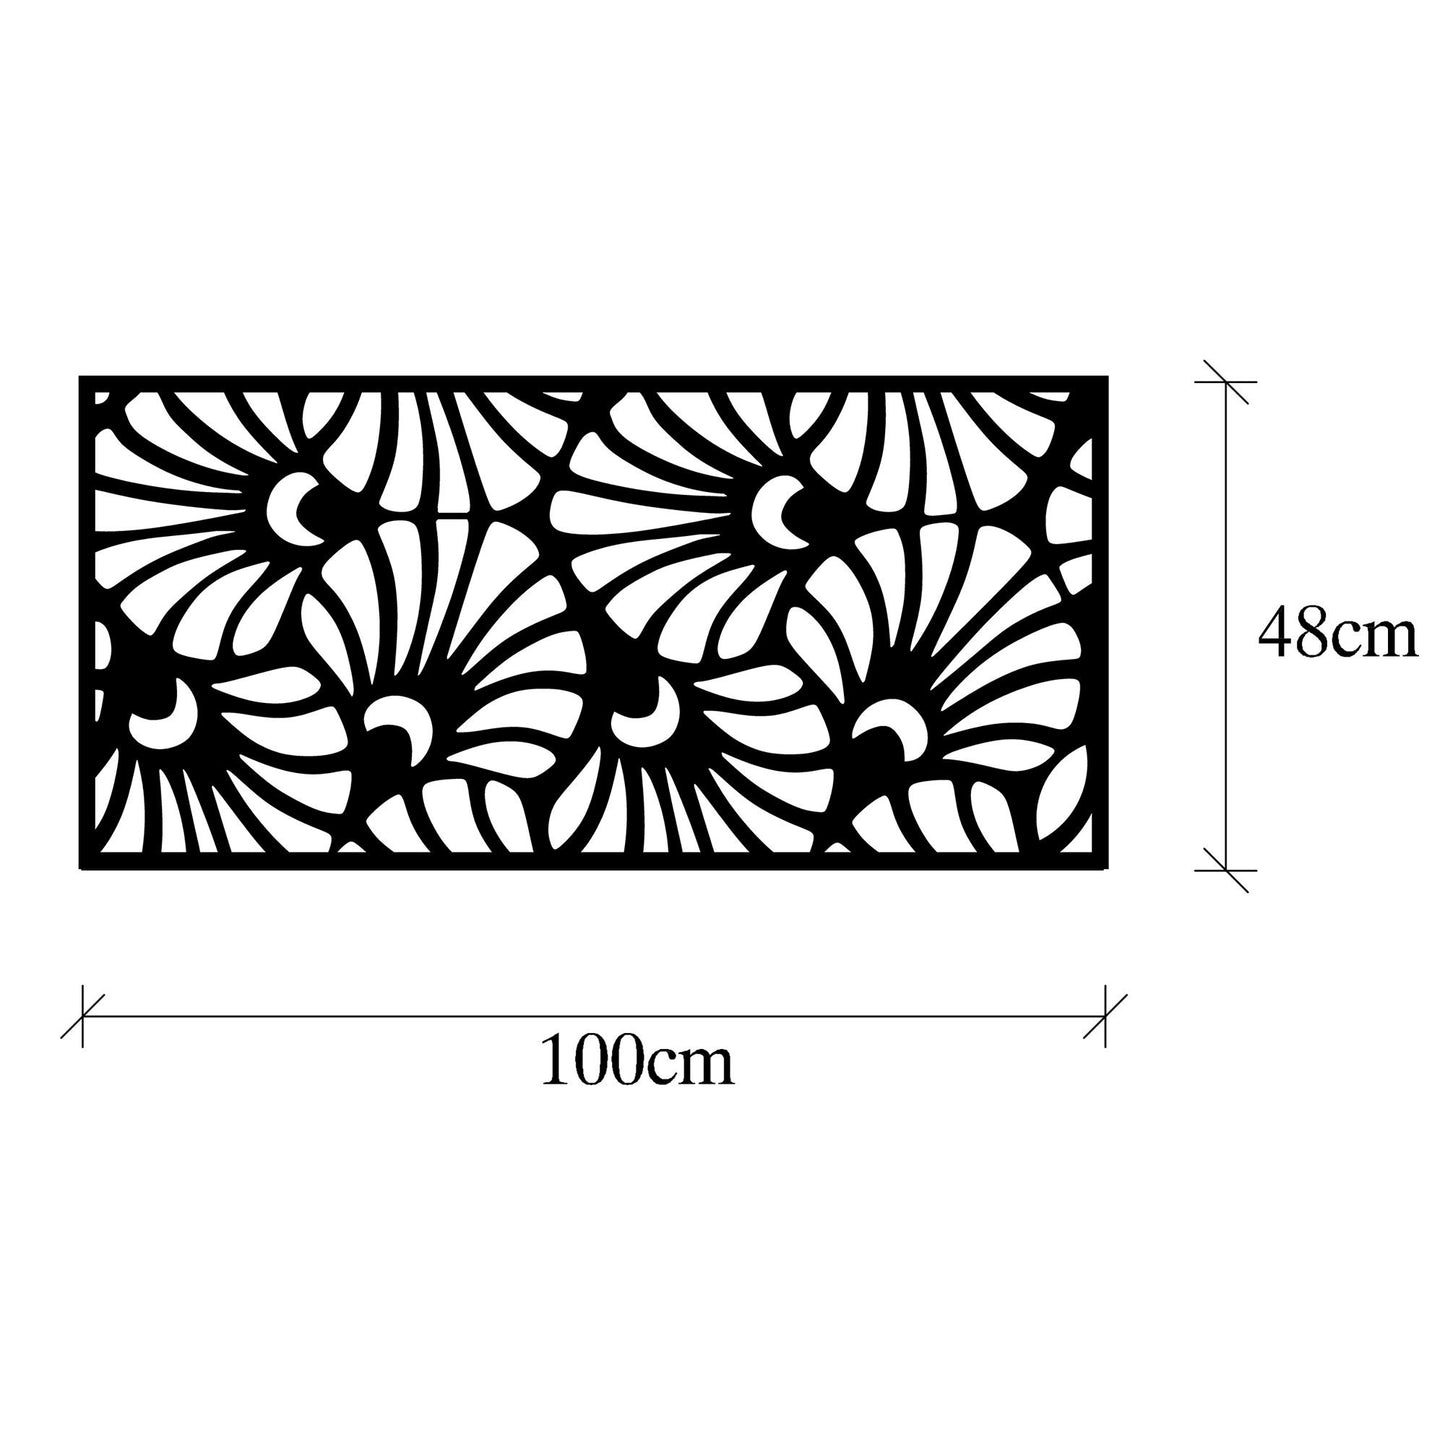 Decorative Panel 7 - Black - Decorative Metal Wall Accessory